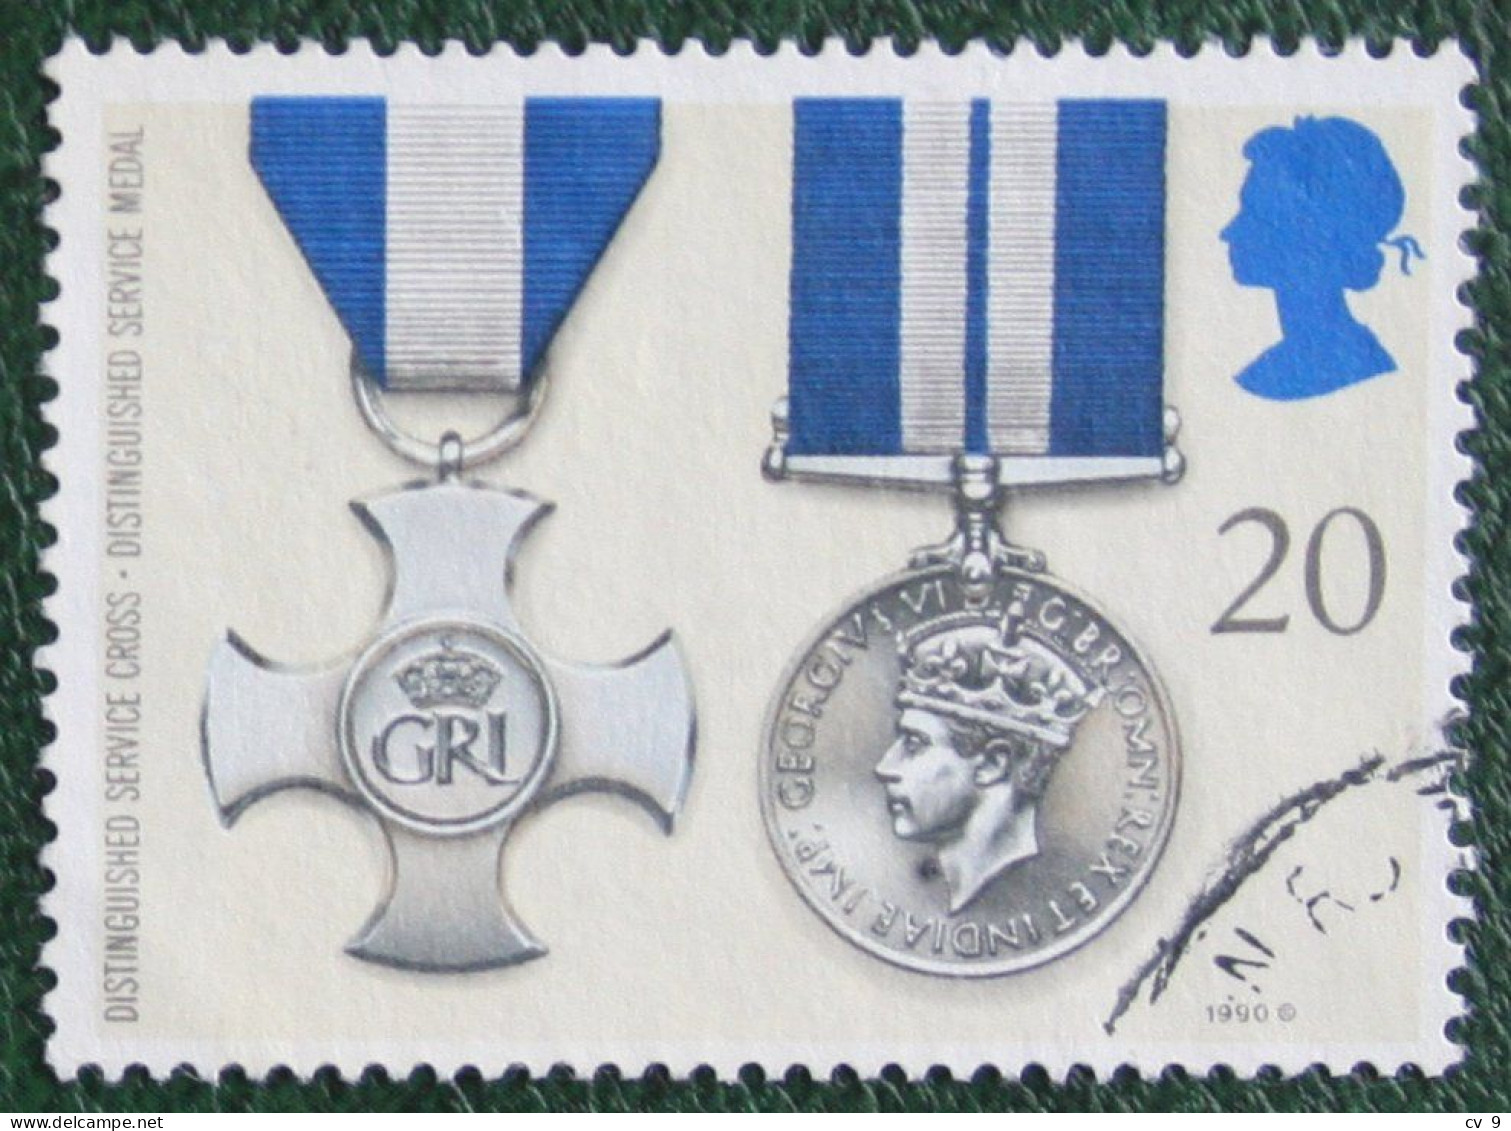 Awards Bravery Medals (Mi 1294) 1990 Used Gebruikt Oblitere ENGLAND GRANDE-BRETAGNE GB GREAT BRITAIN - Gebruikt